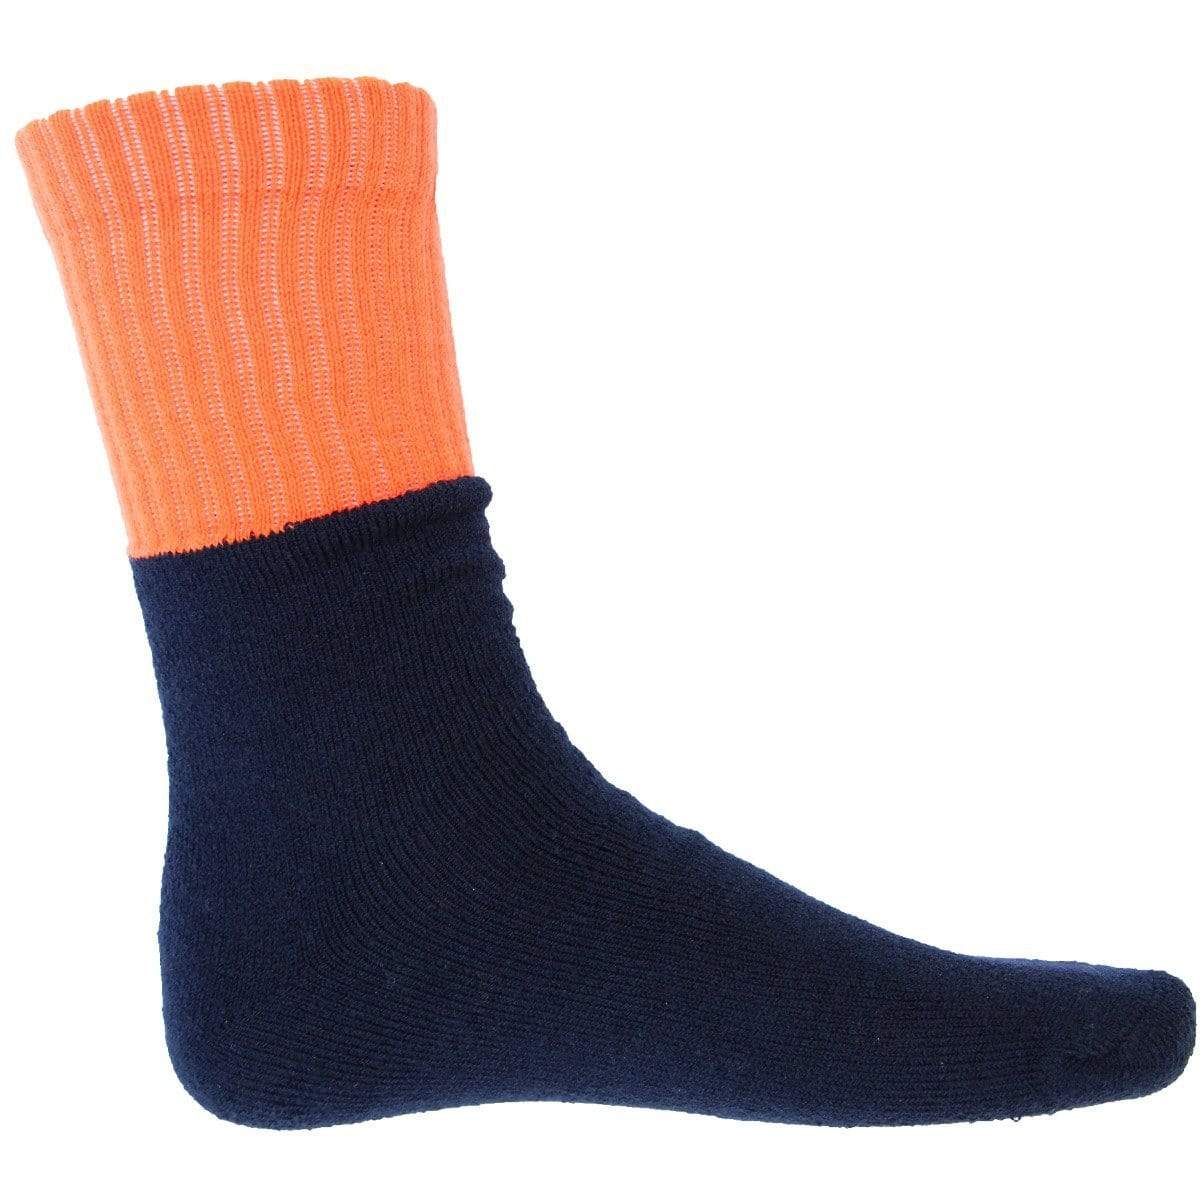 Dnc Workwear Hi-vis Two-tone Acrylic 3 Pack Work Socks - S123 Work Wear DNC Workwear Orange/Navy 12+ 